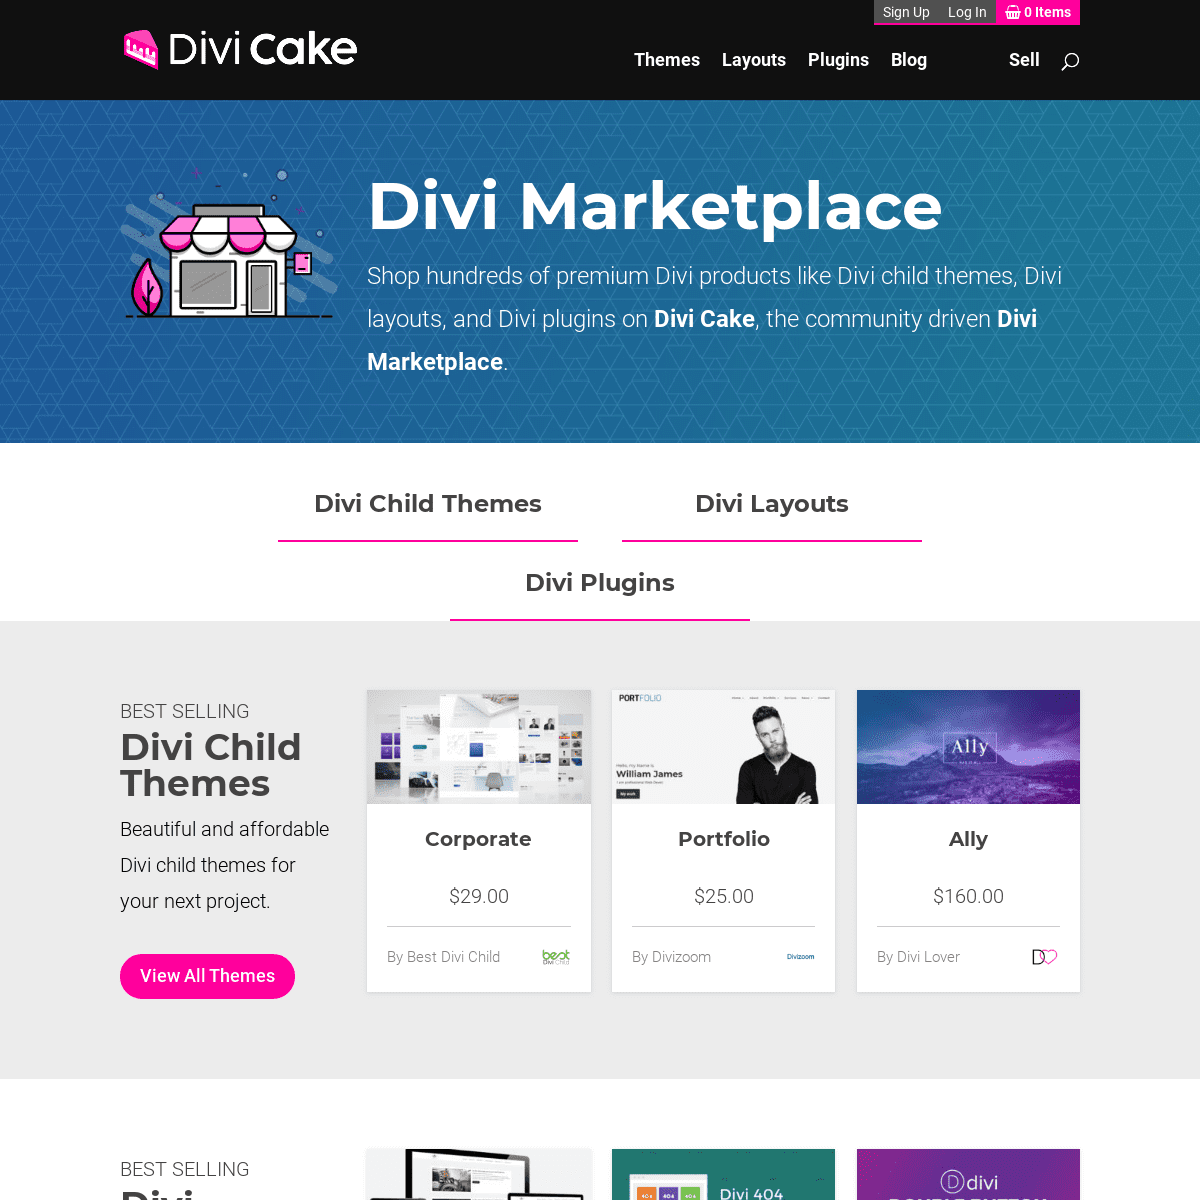 A complete backup of divicake.com